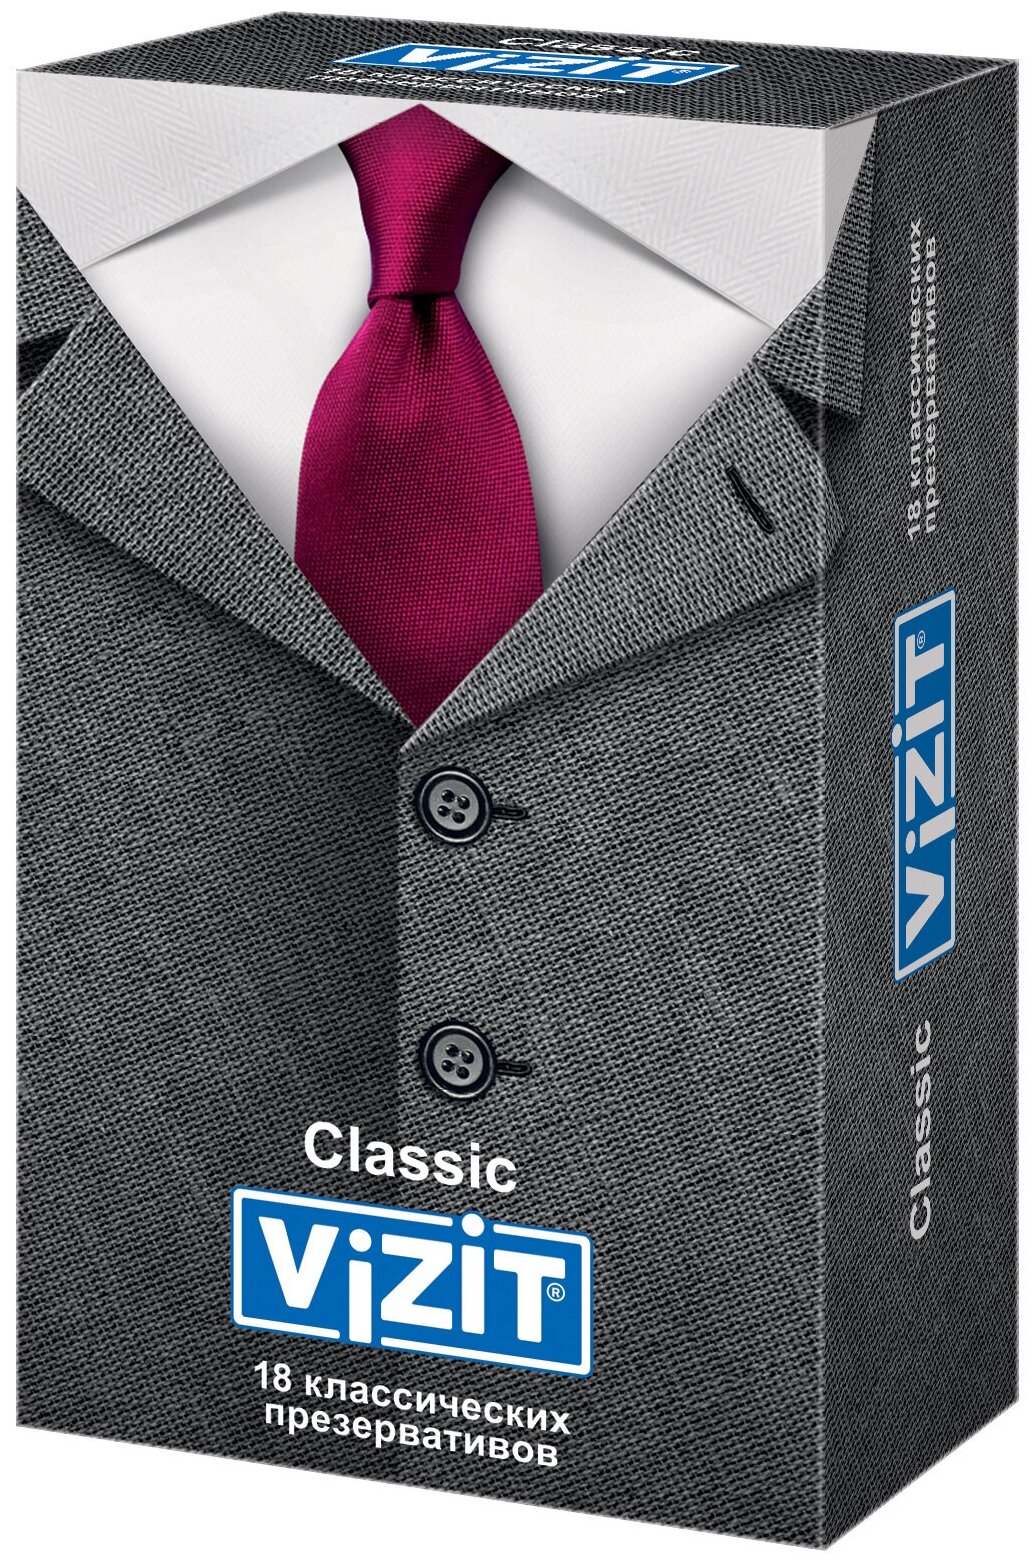 VIZIT Classic Презервативы Классические, 18 шт